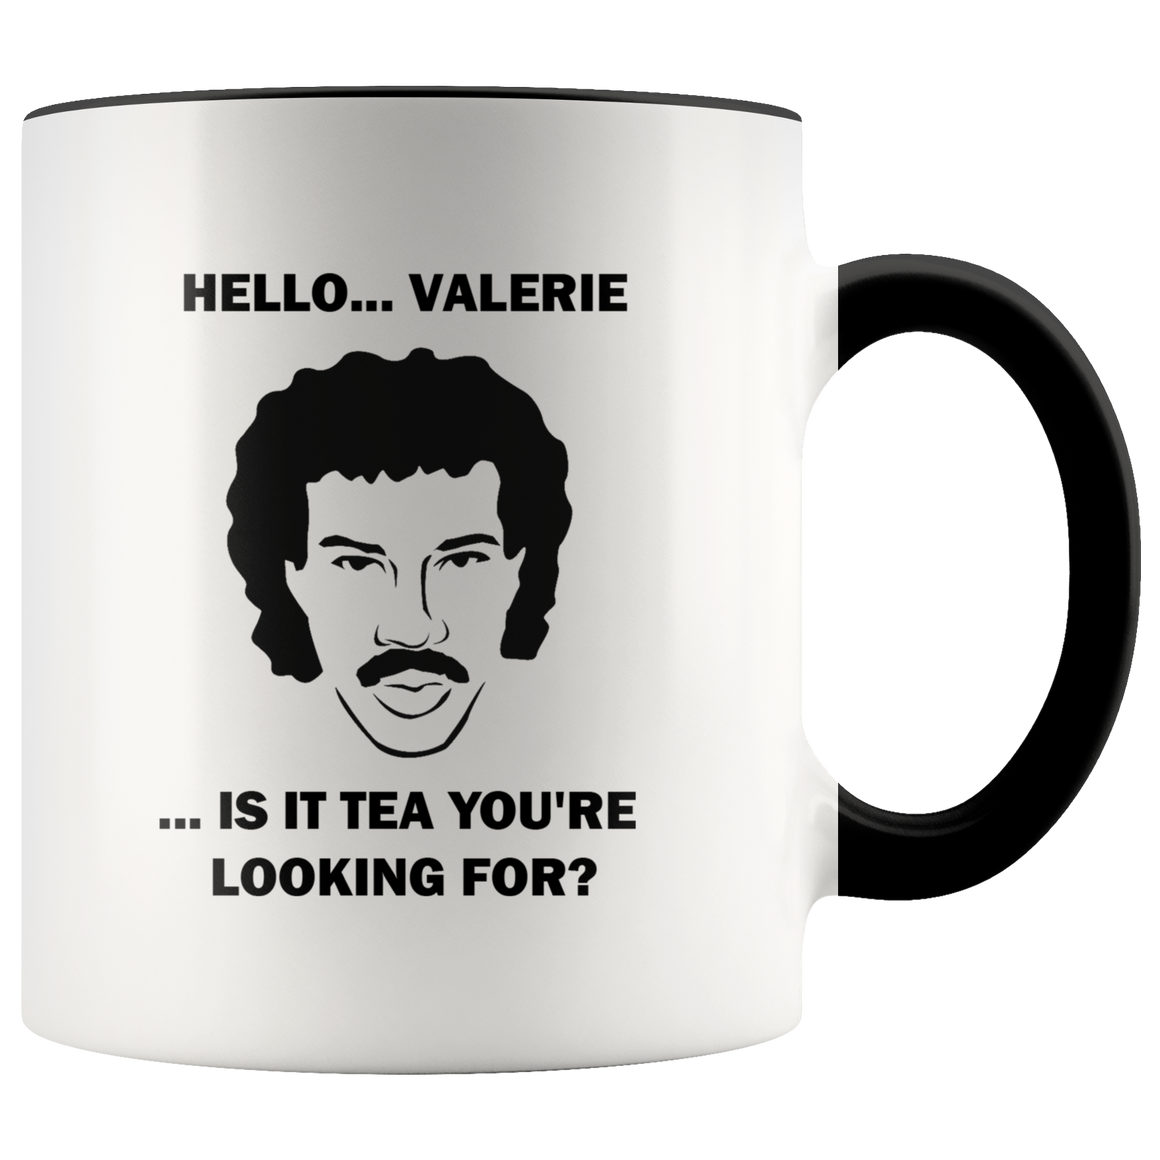 Hello personalized mug - Valerie